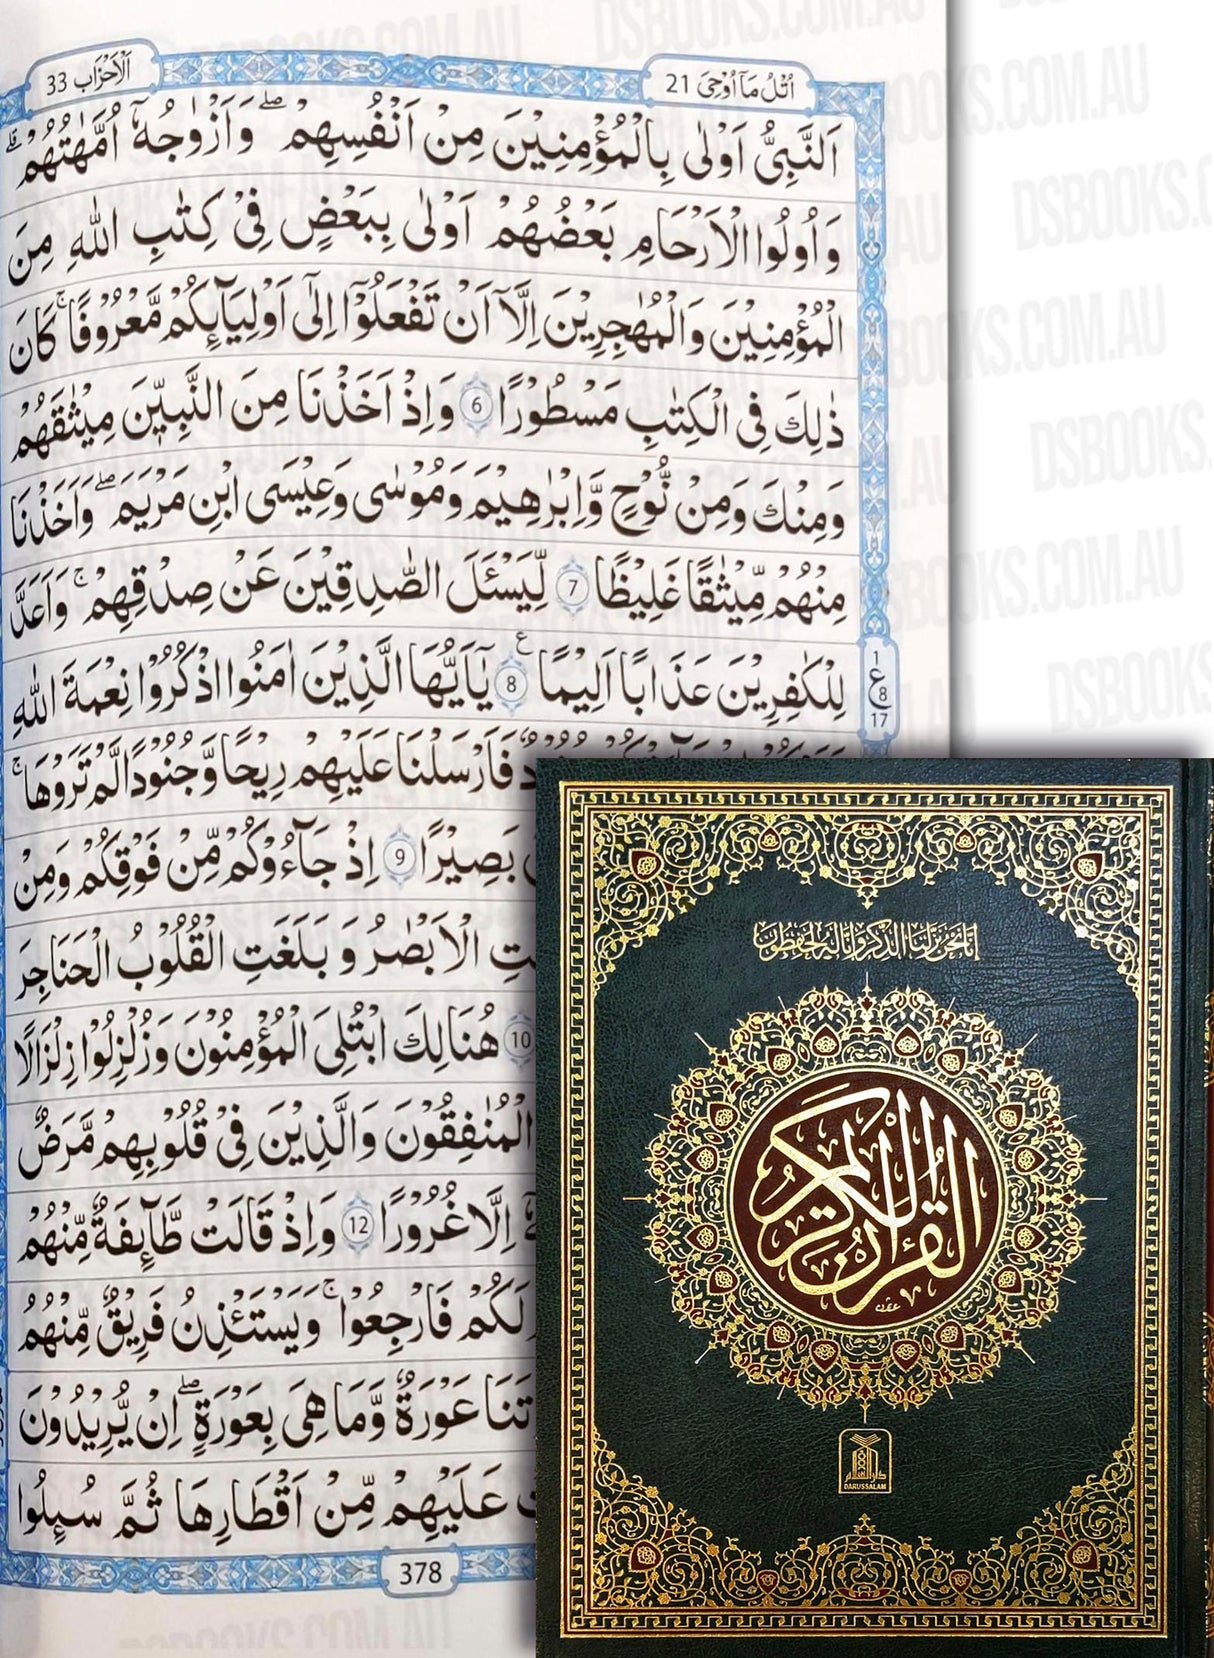 Al Quran ( 17 x 24cm x 3cm )16 Lines Darussalam ( Indo Pak Persian Script )